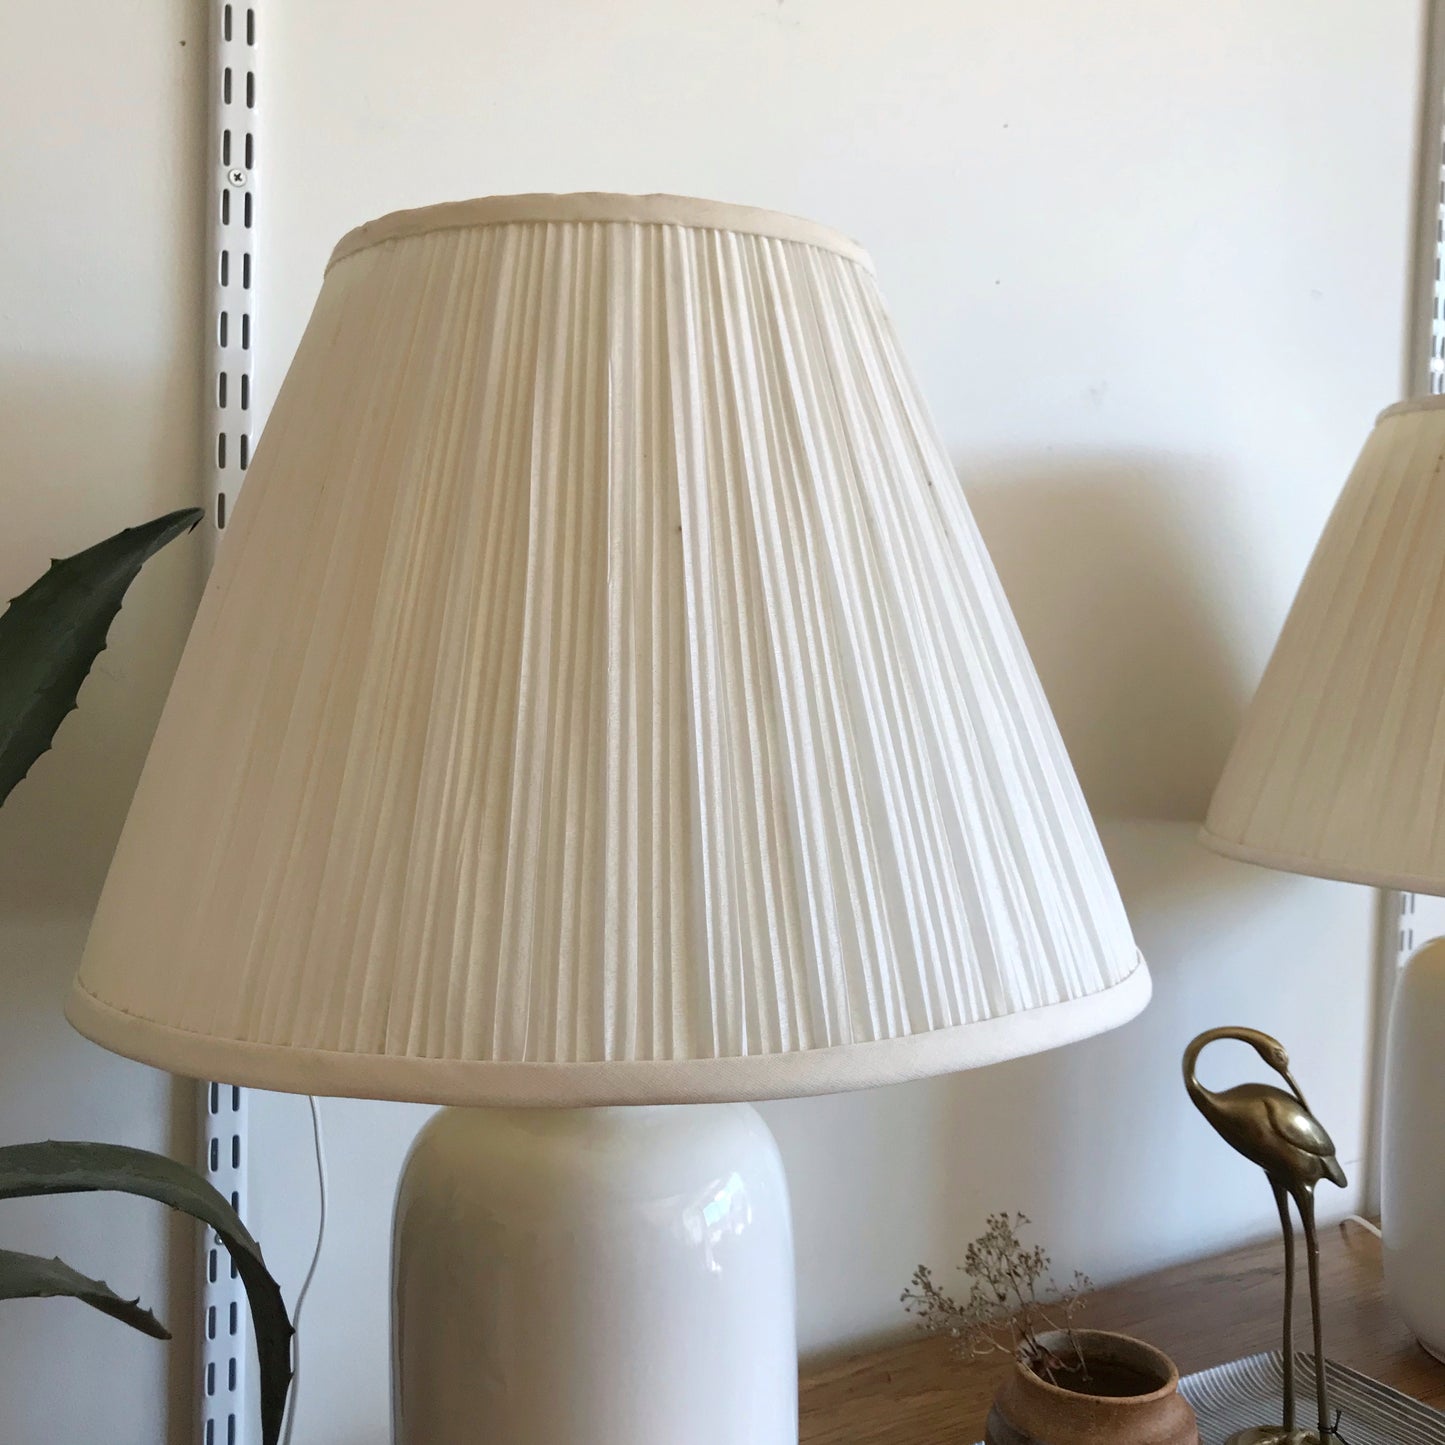 Pair of Vintage Ceramic Lamps, circa 1990